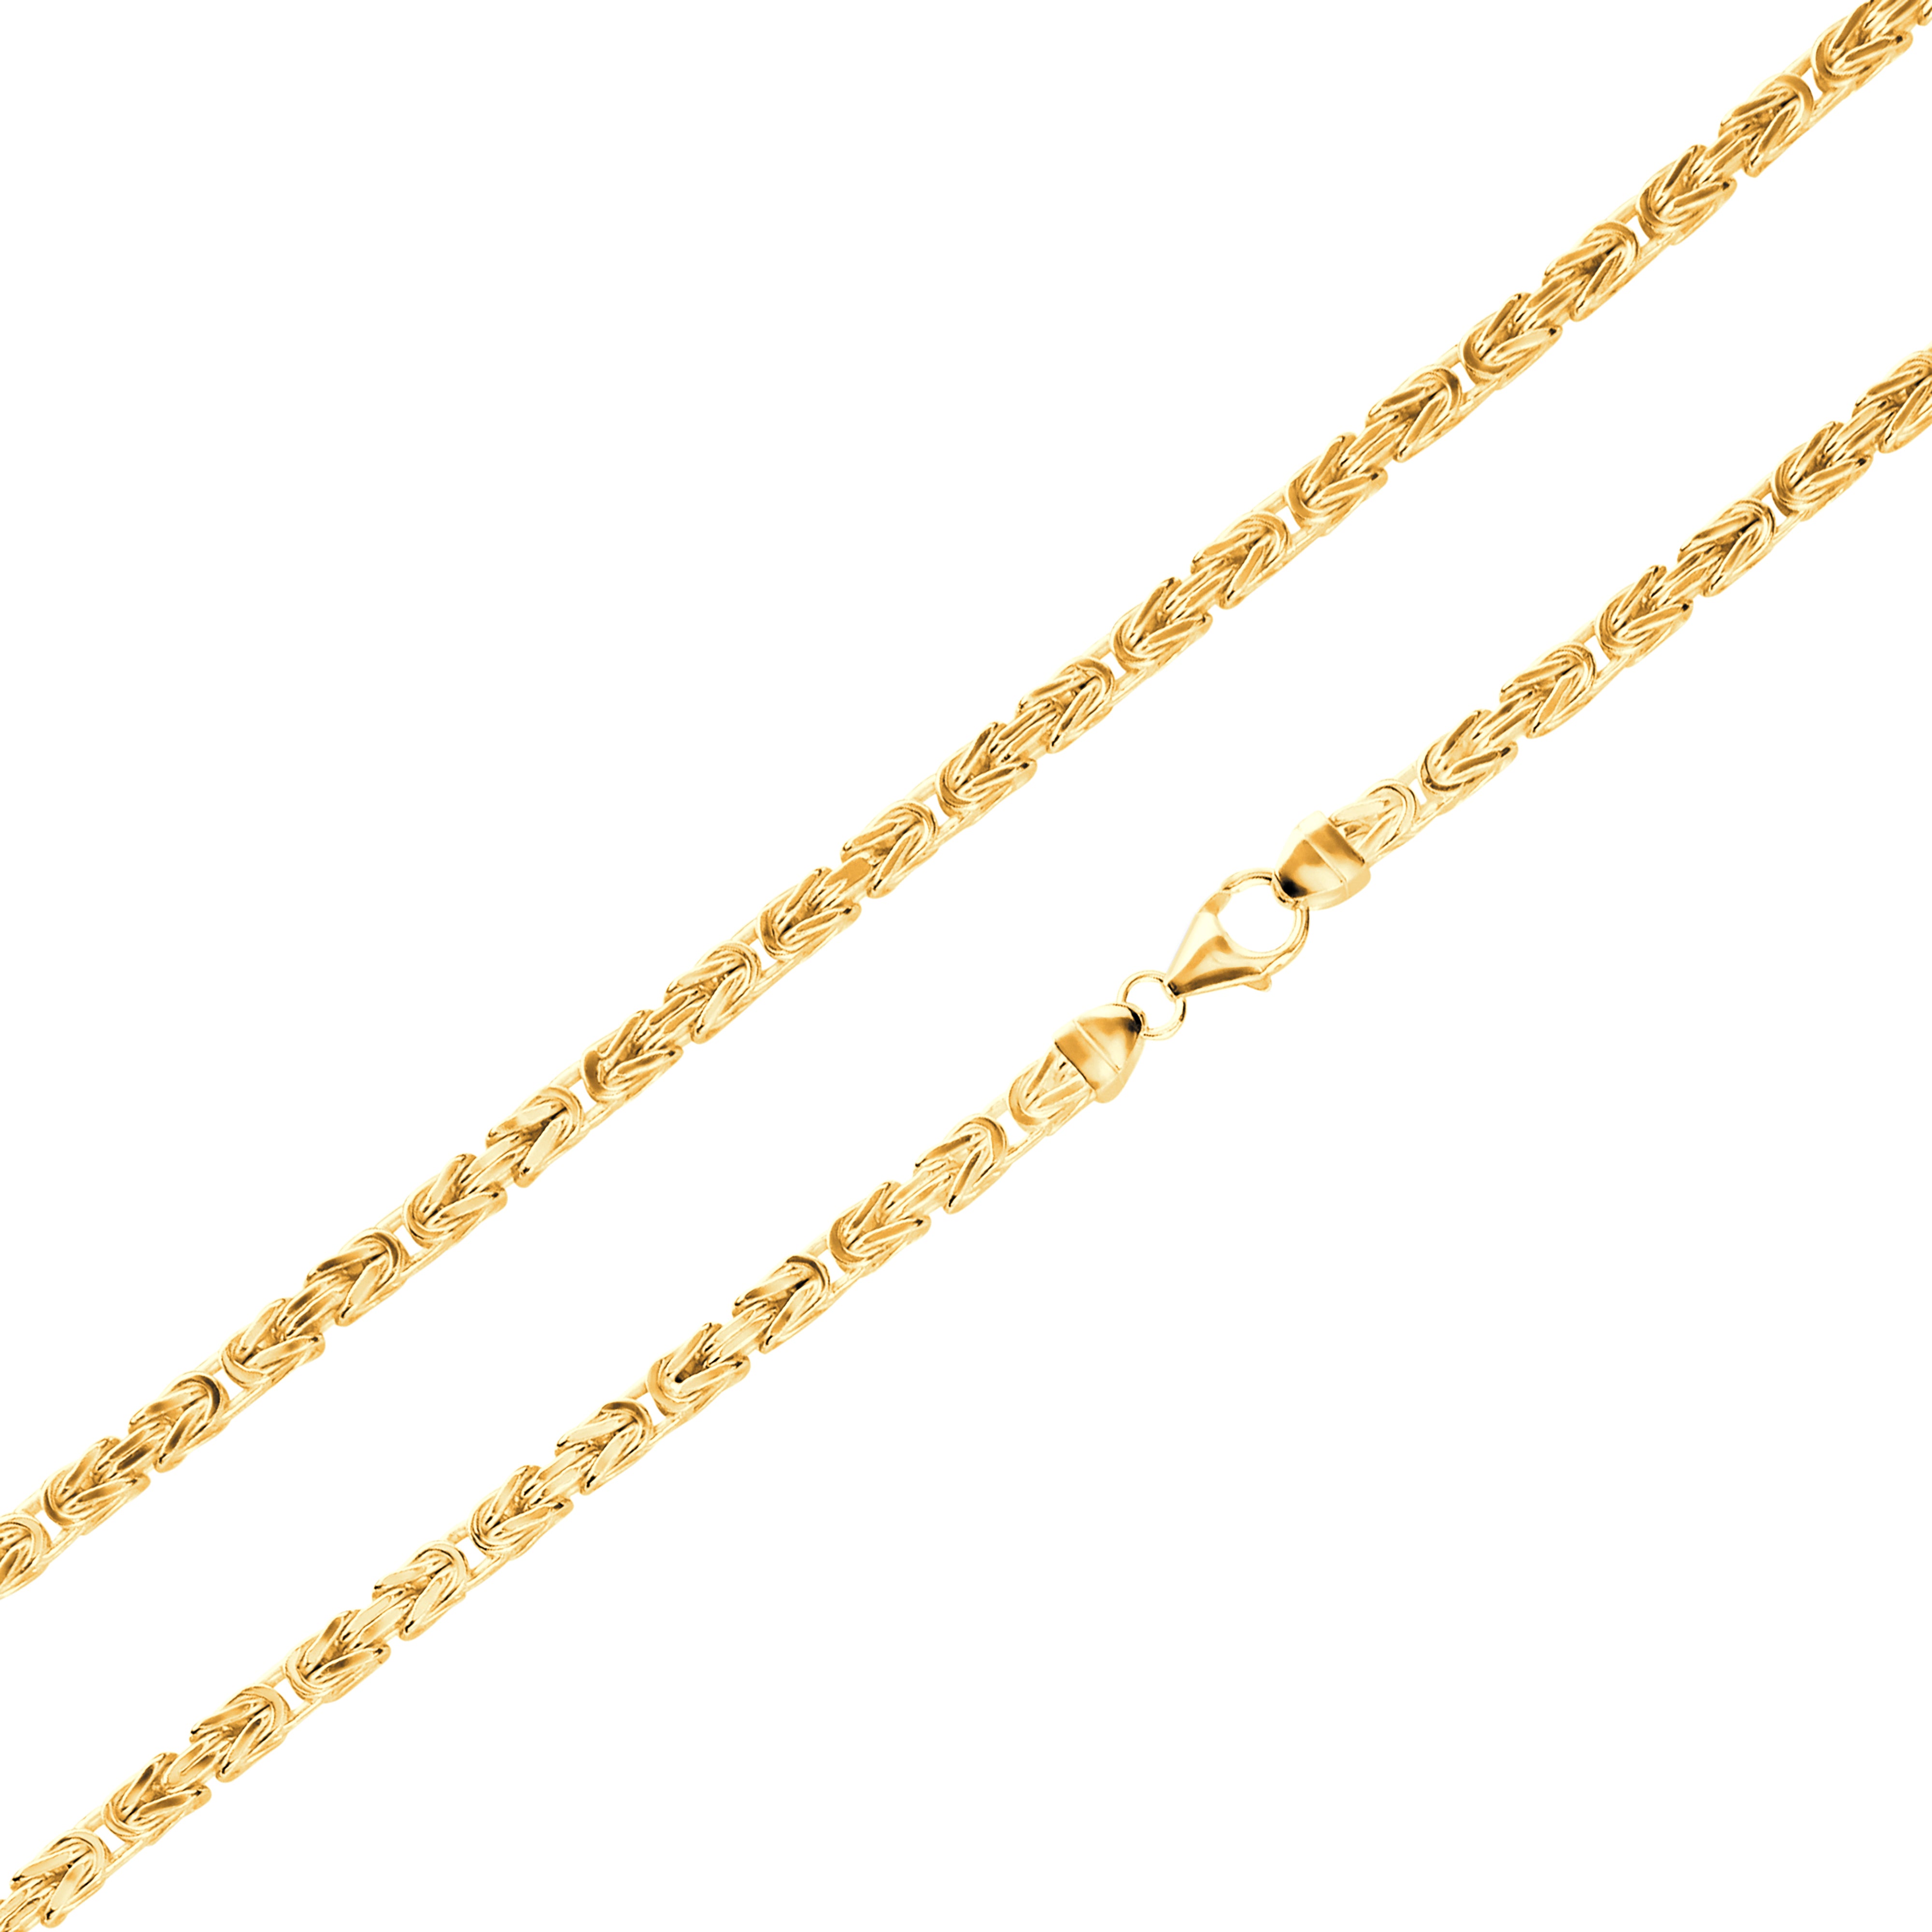 Byzantine chain 5.5mm wide - 585 gold